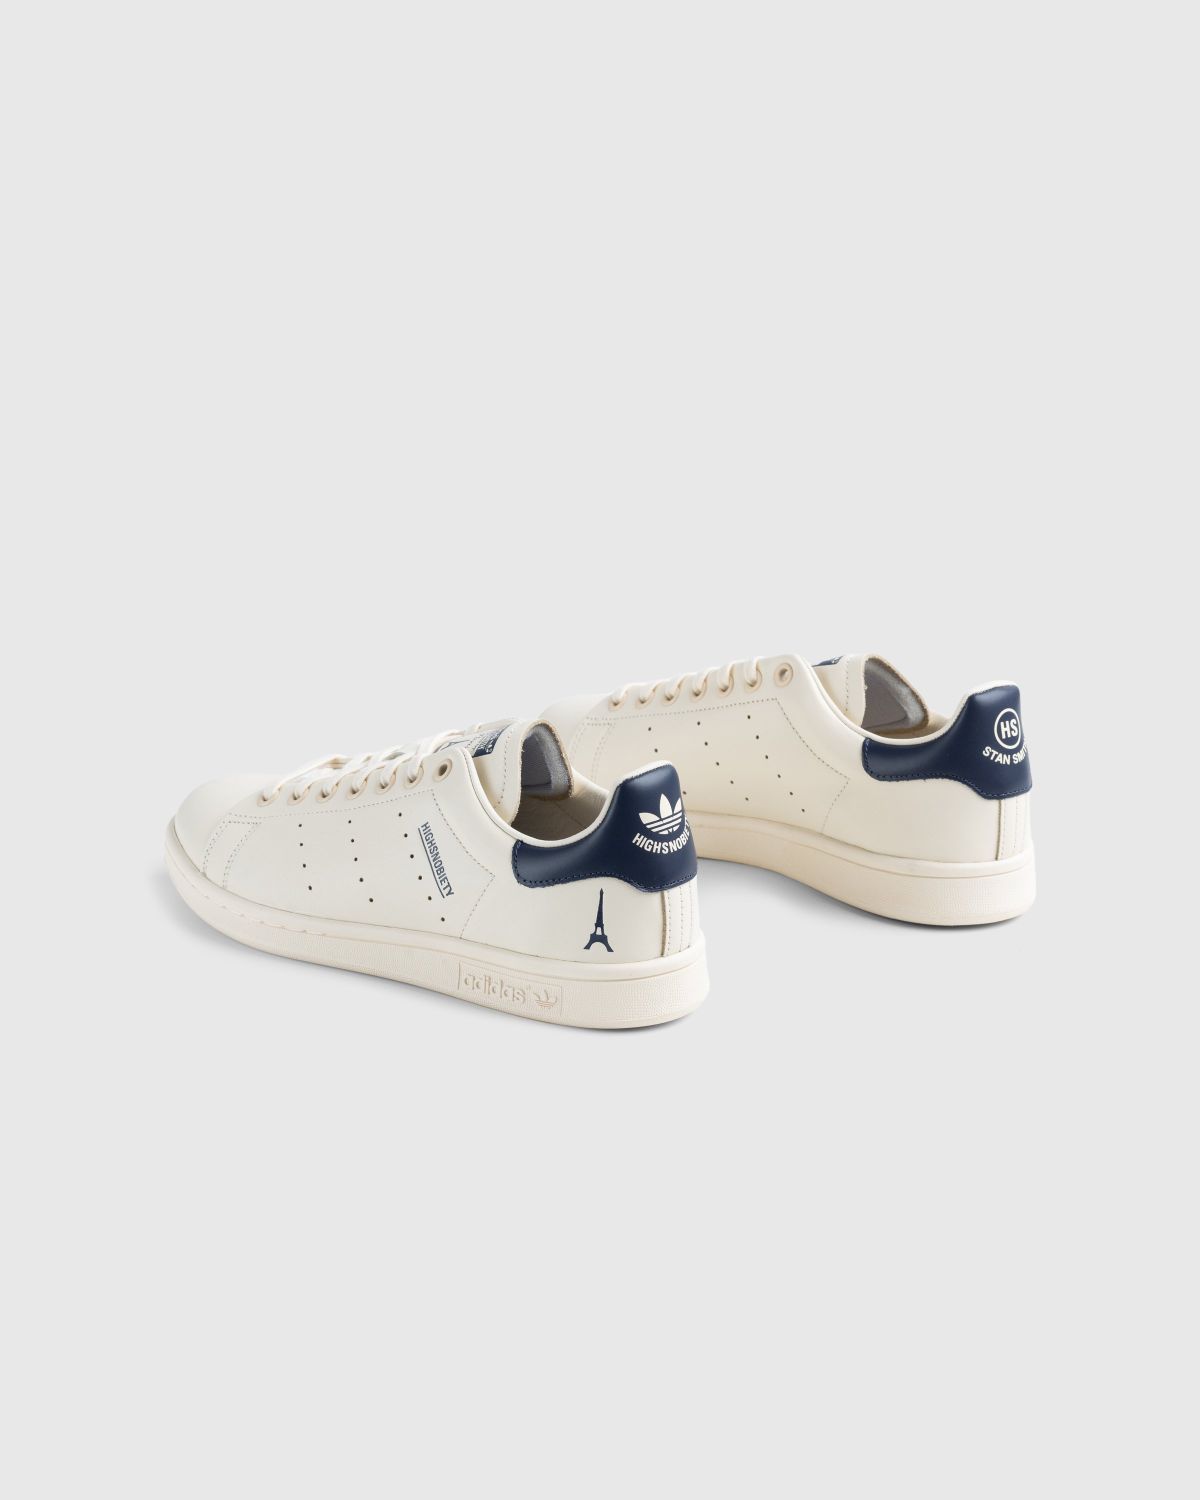 Adidas x Highsnobiety – Not In Paris Stan Smith Cream/Blue - Shoes - Beige - Image 4